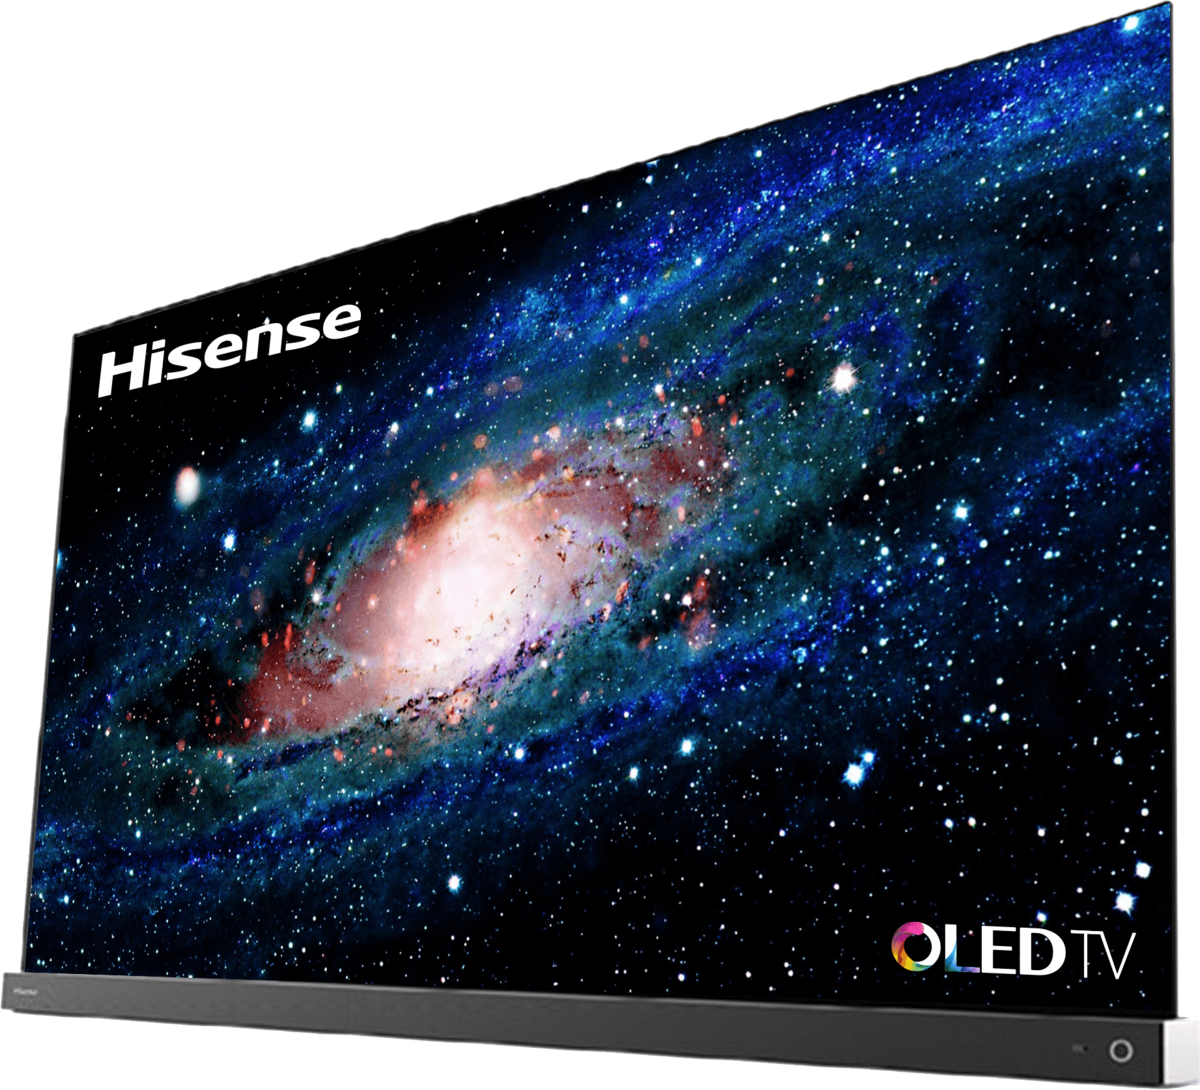 OLED A9G - Hisense © Hisense